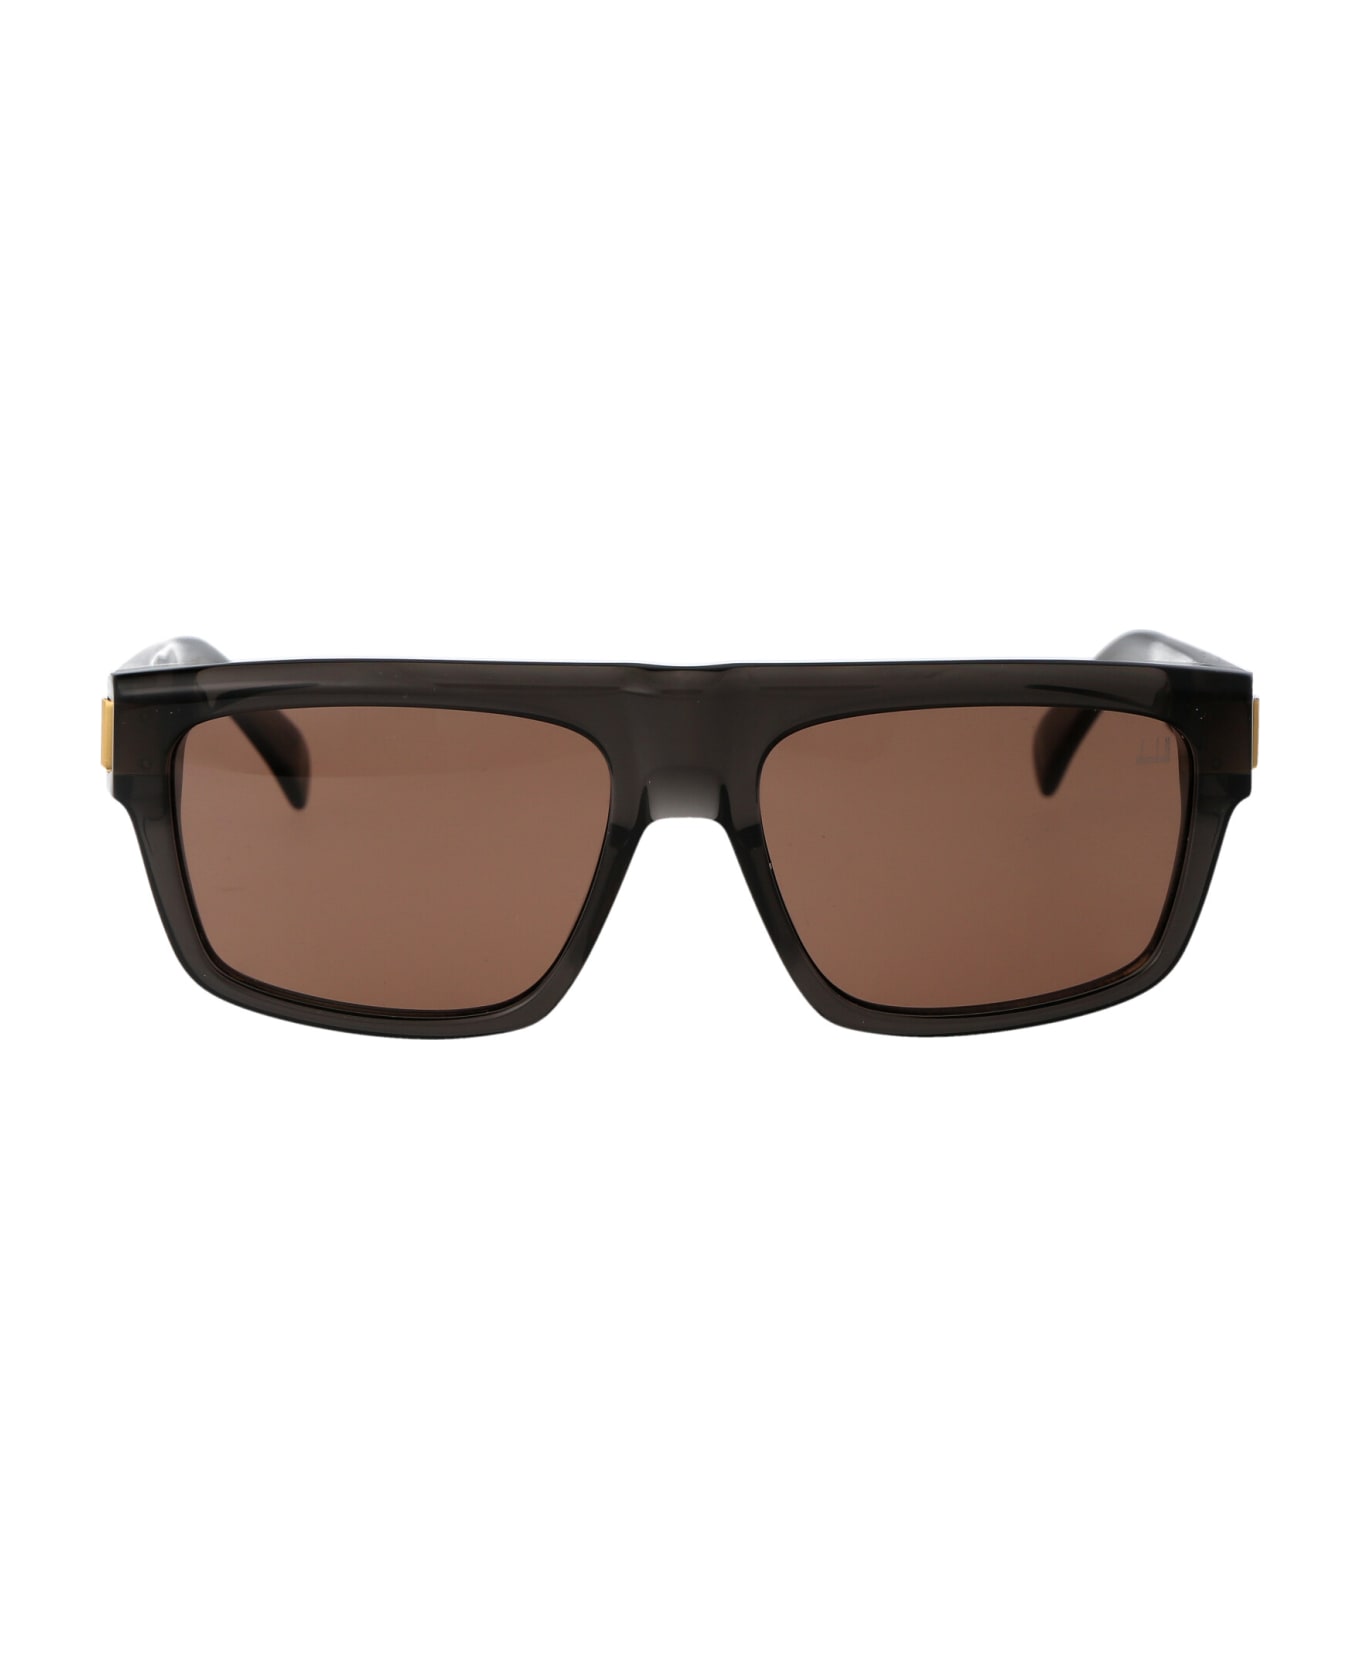 Dunhill Du0055s Sunglasses - 004 GREY GREY BROWN